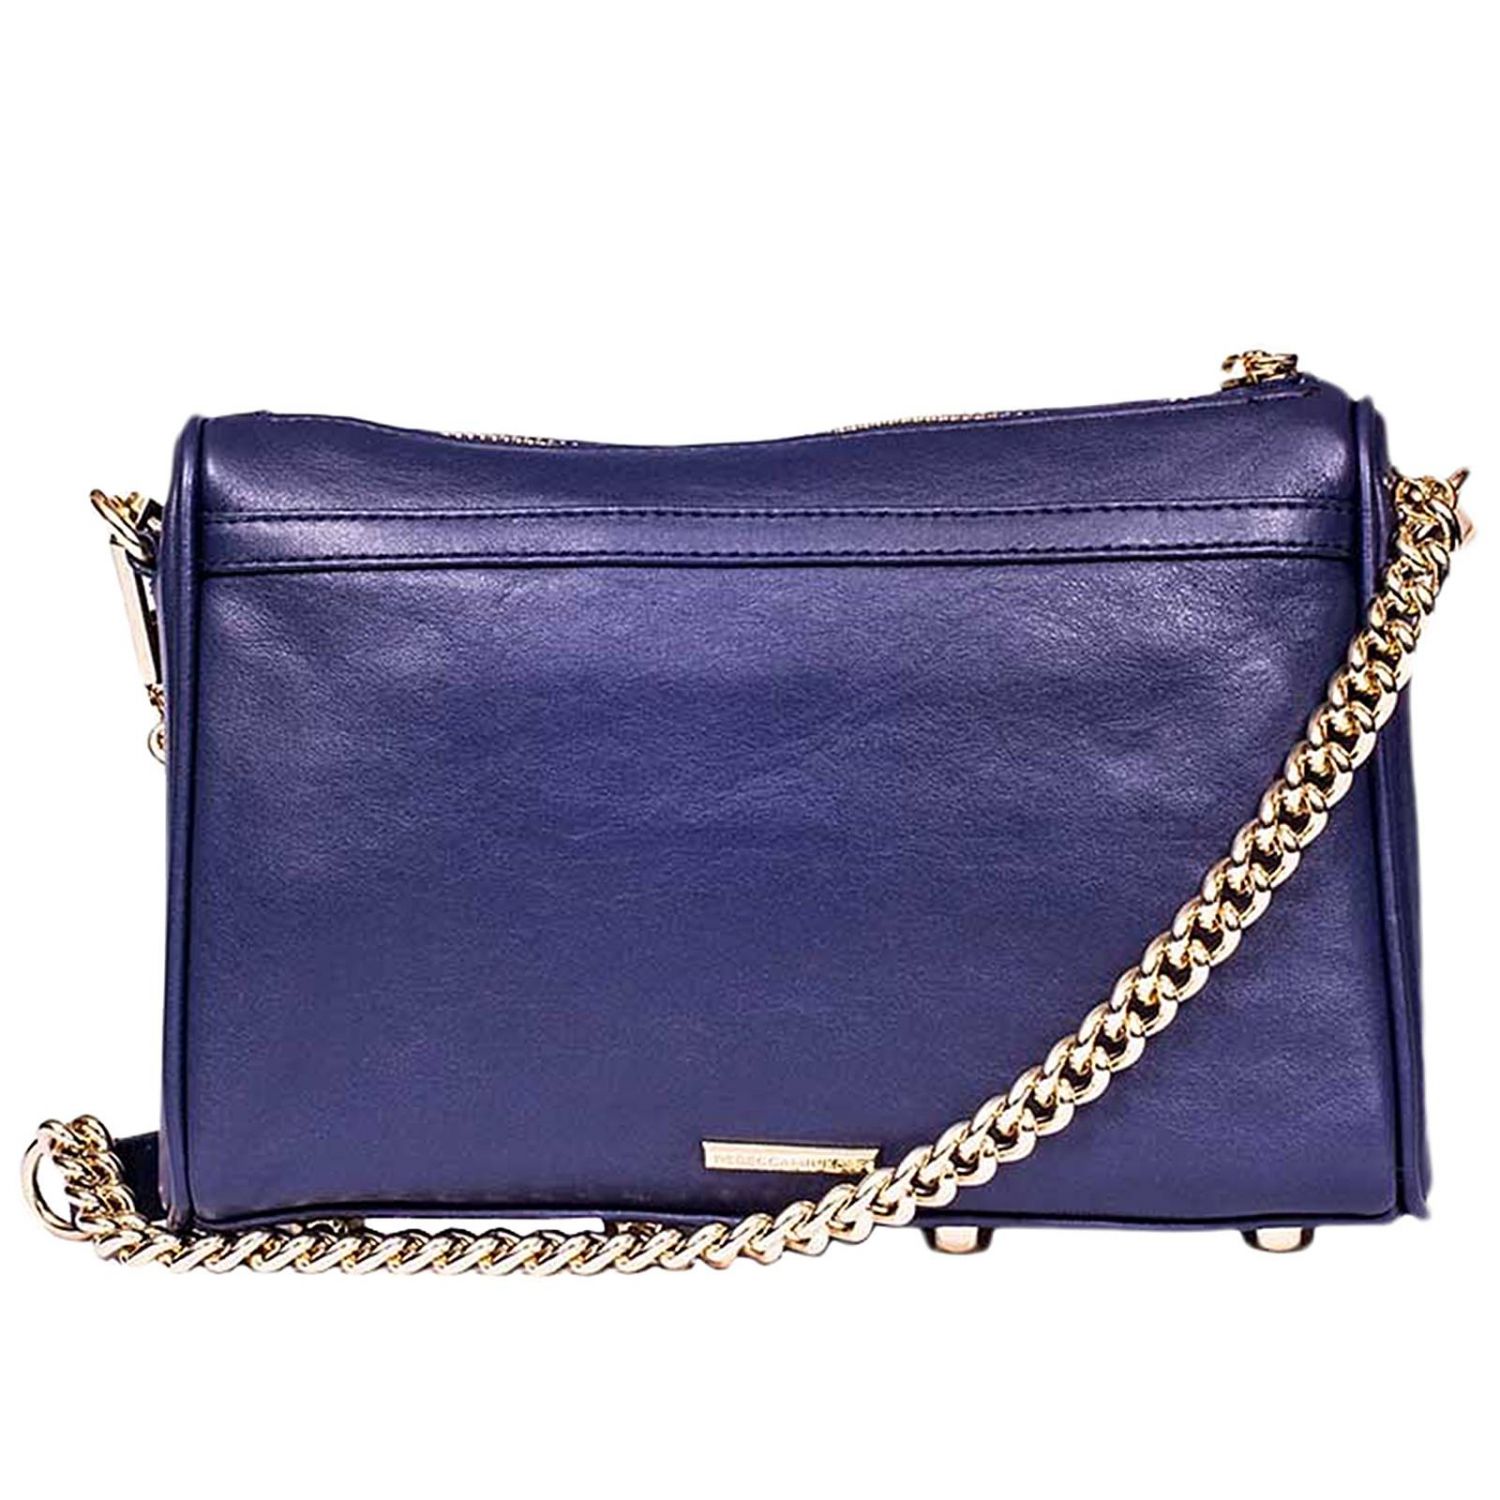 Rebecca Minkoff Outlet: Crossbody bags women - Blue | Crossbody Bags ...